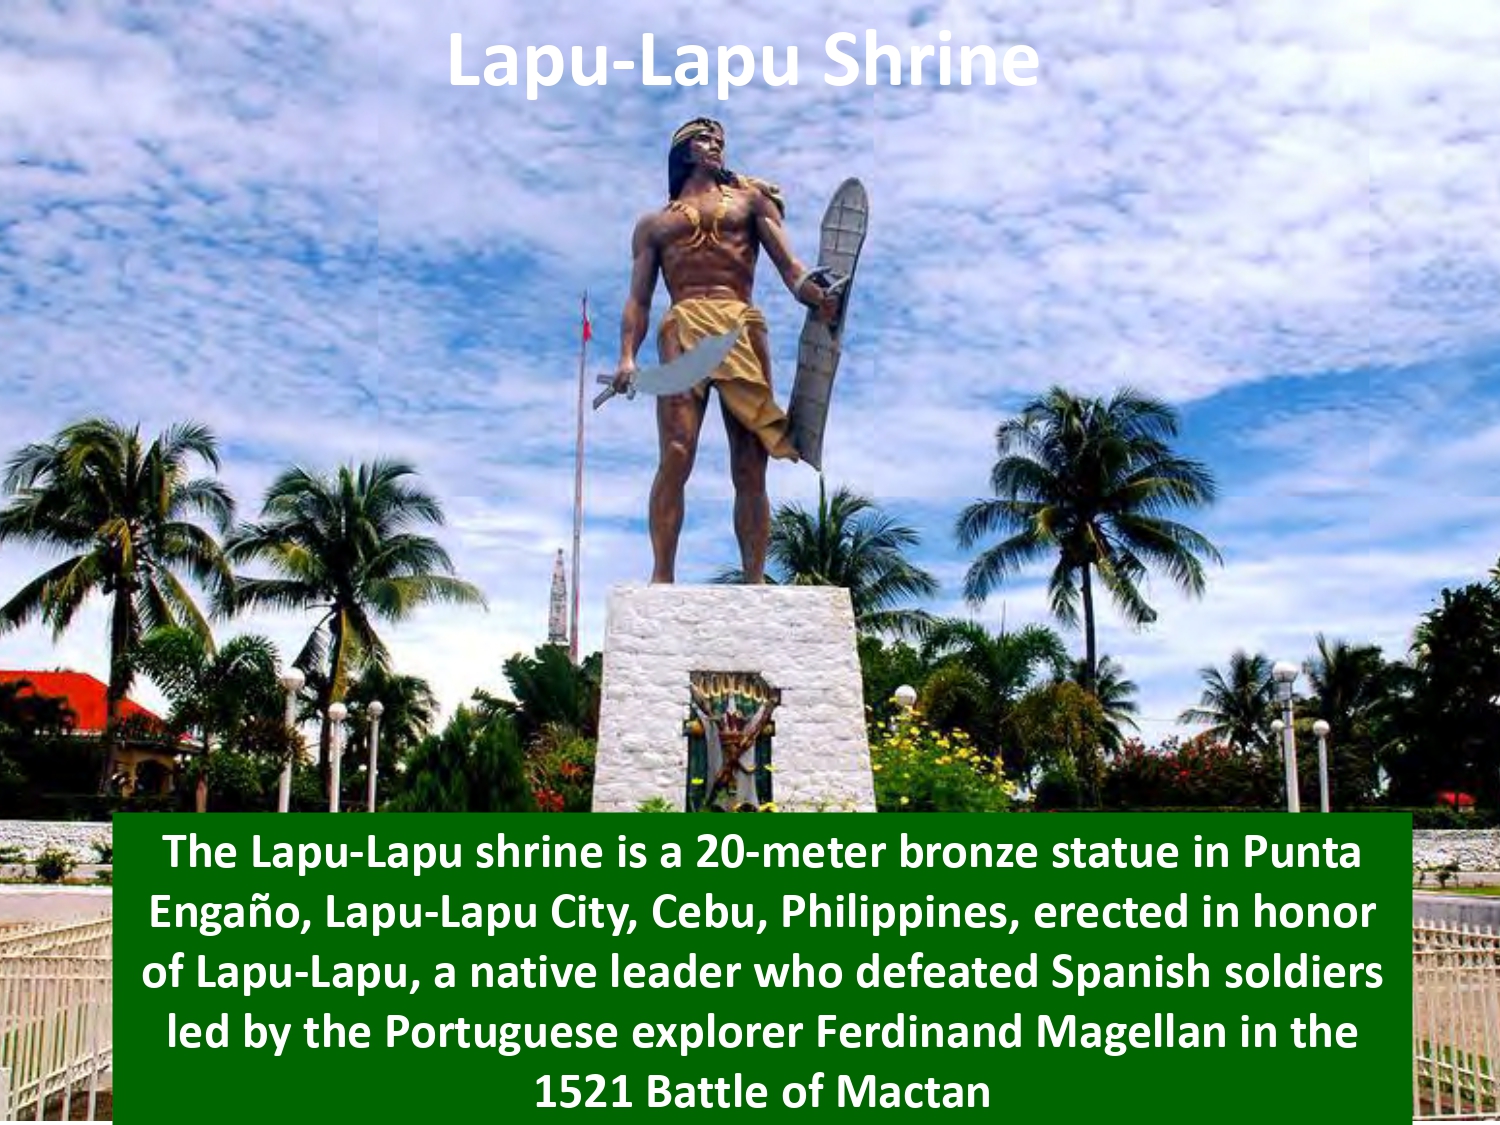 The Lapu-Lapu shrine is a 20-meter bronze statue in Punta Engaño, Lapu-Lapu City, Cebu, Philippines, erected in honor of Lapu-Lapu, a native leader who defeated Spanish soldiers led by the Portuguese explorer Ferdinand Magellan in the 1521 Battle of Mactan